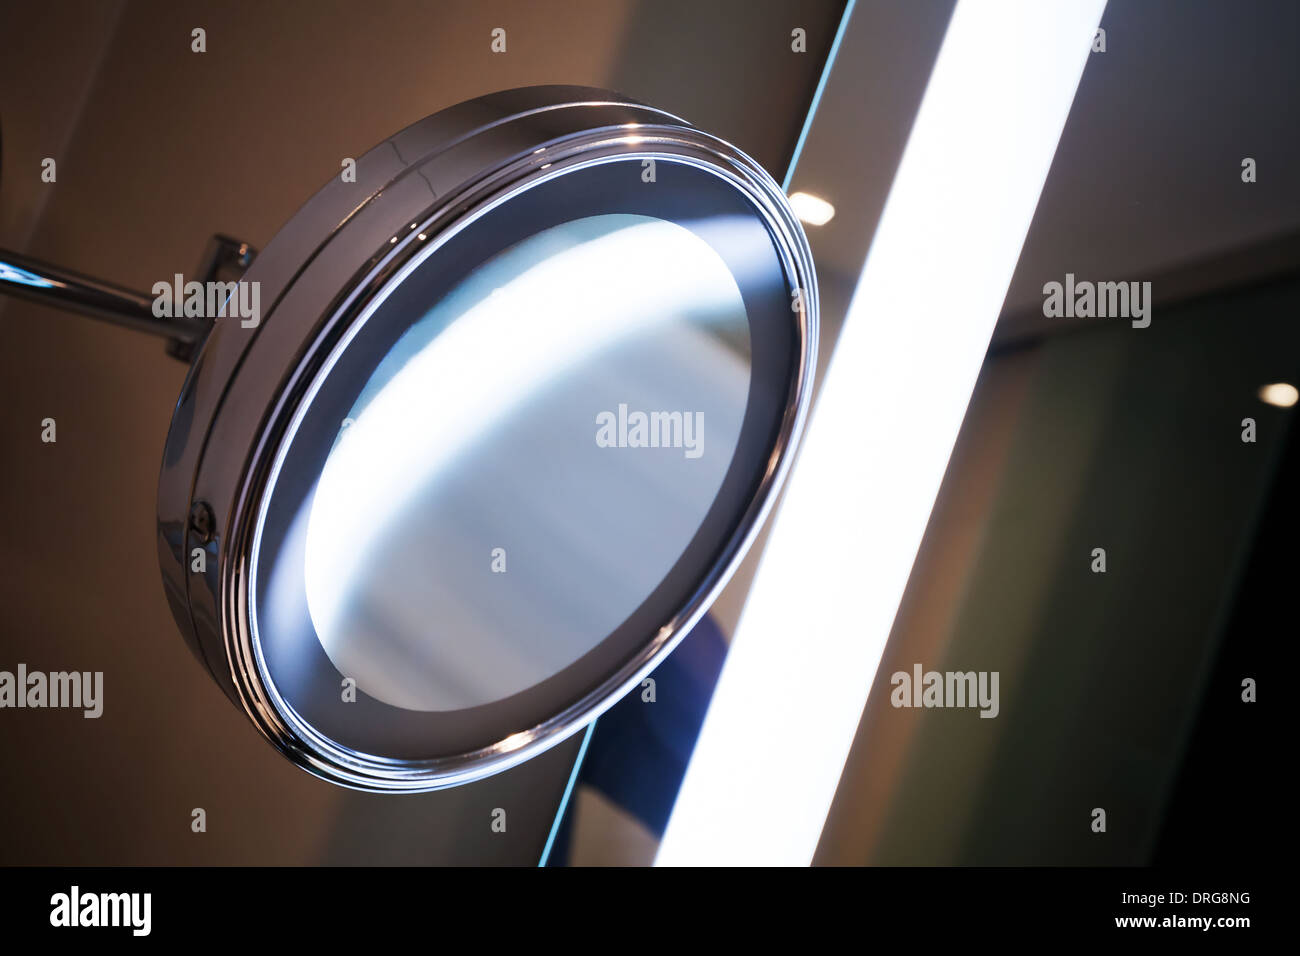 Round mirror with bright illumination in the bathroom Stock Photo